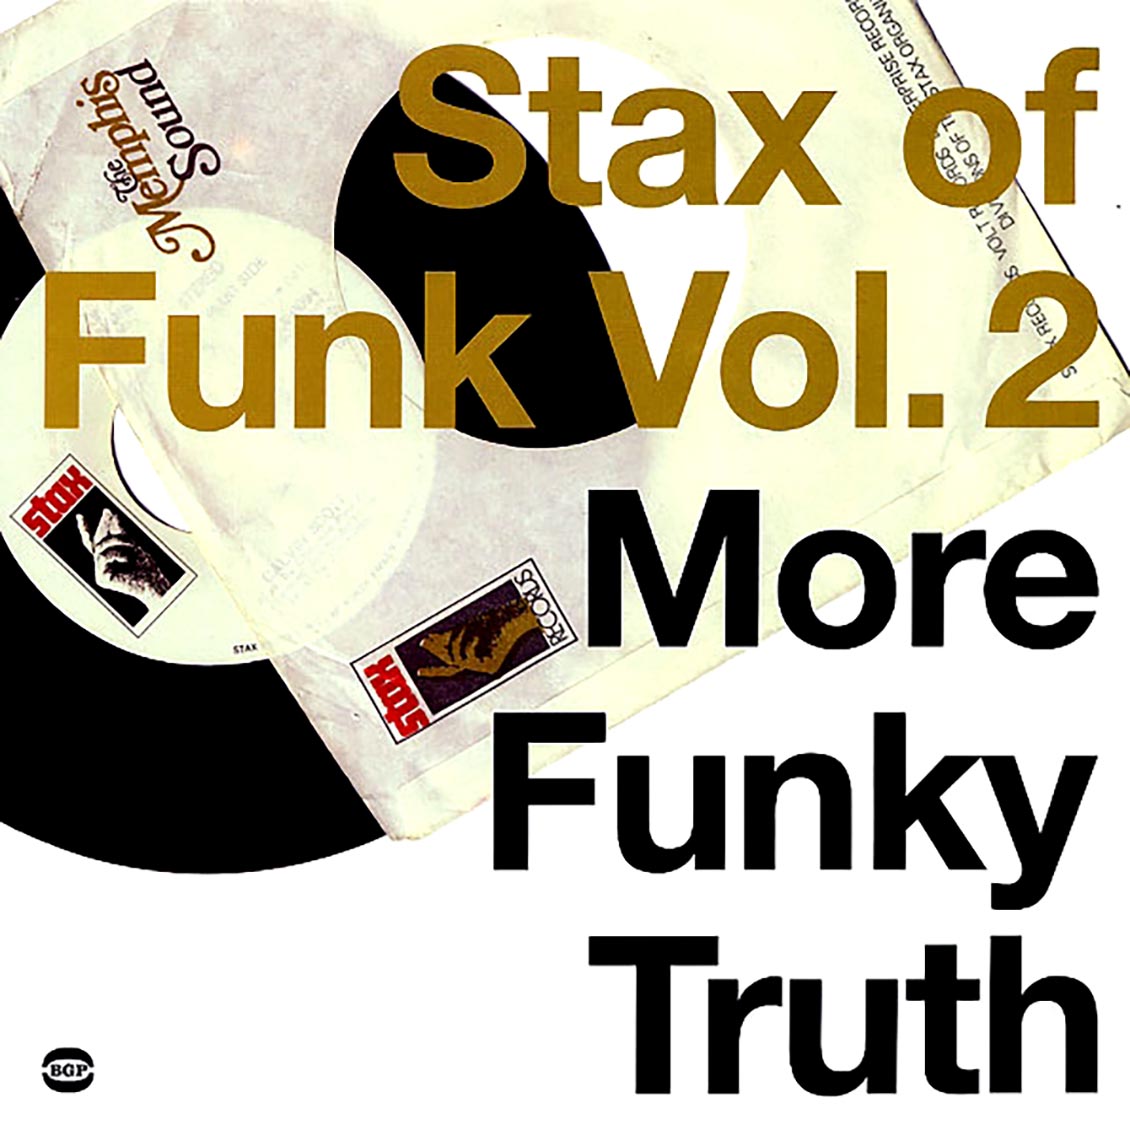 Rufus Thomas, The Bar-Keys, Calvin Scott, Bernie Hayes, Etc. - Stax Of Funk Volume 2: More Funky Truth